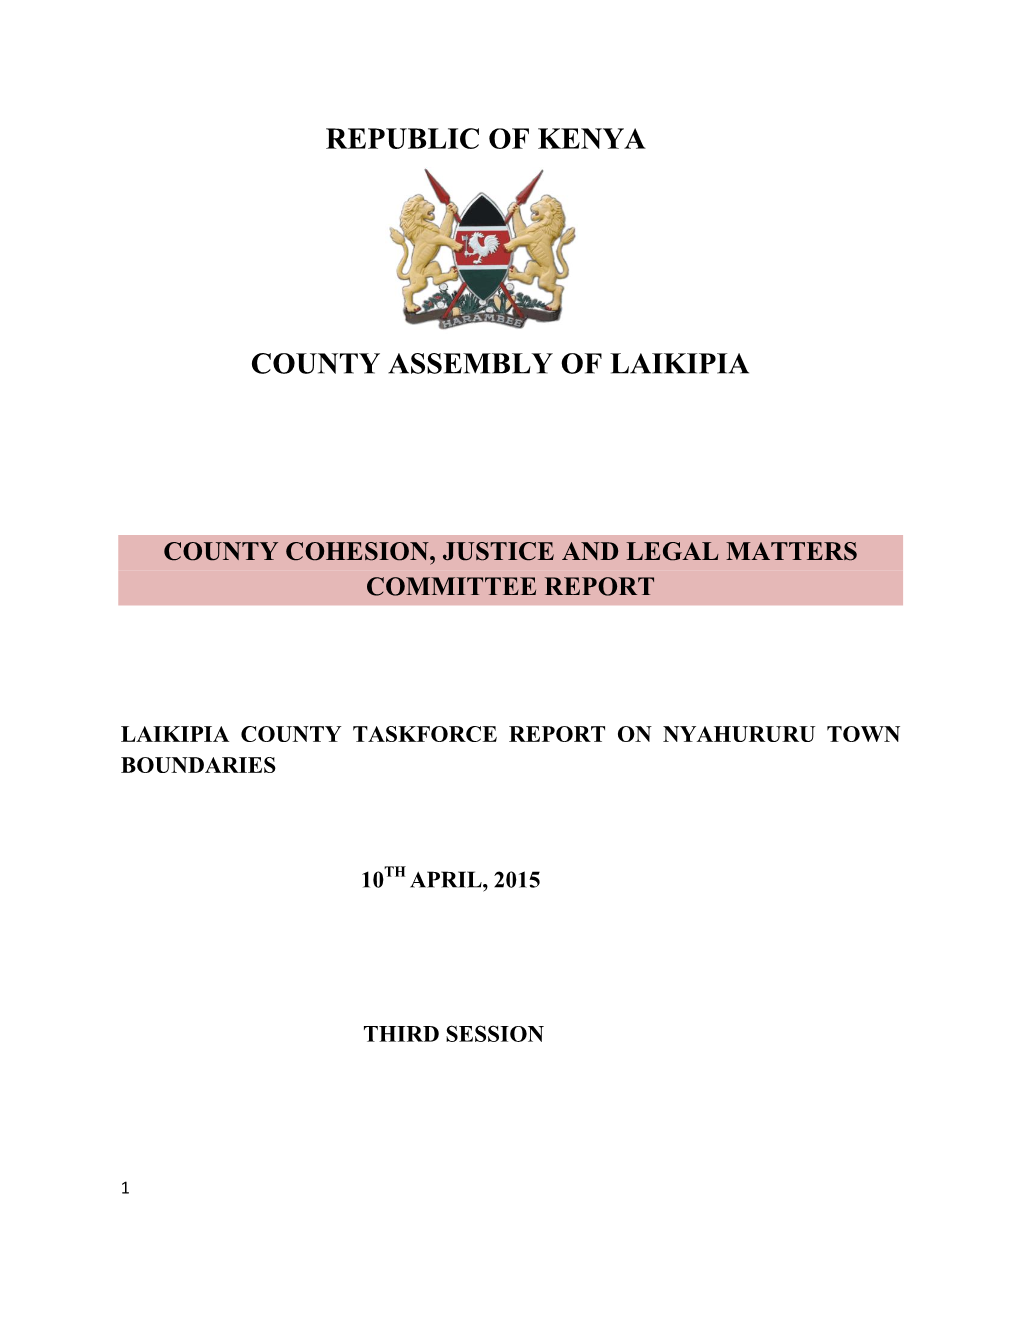 Republic of Kenya County Assembly of Laikipia